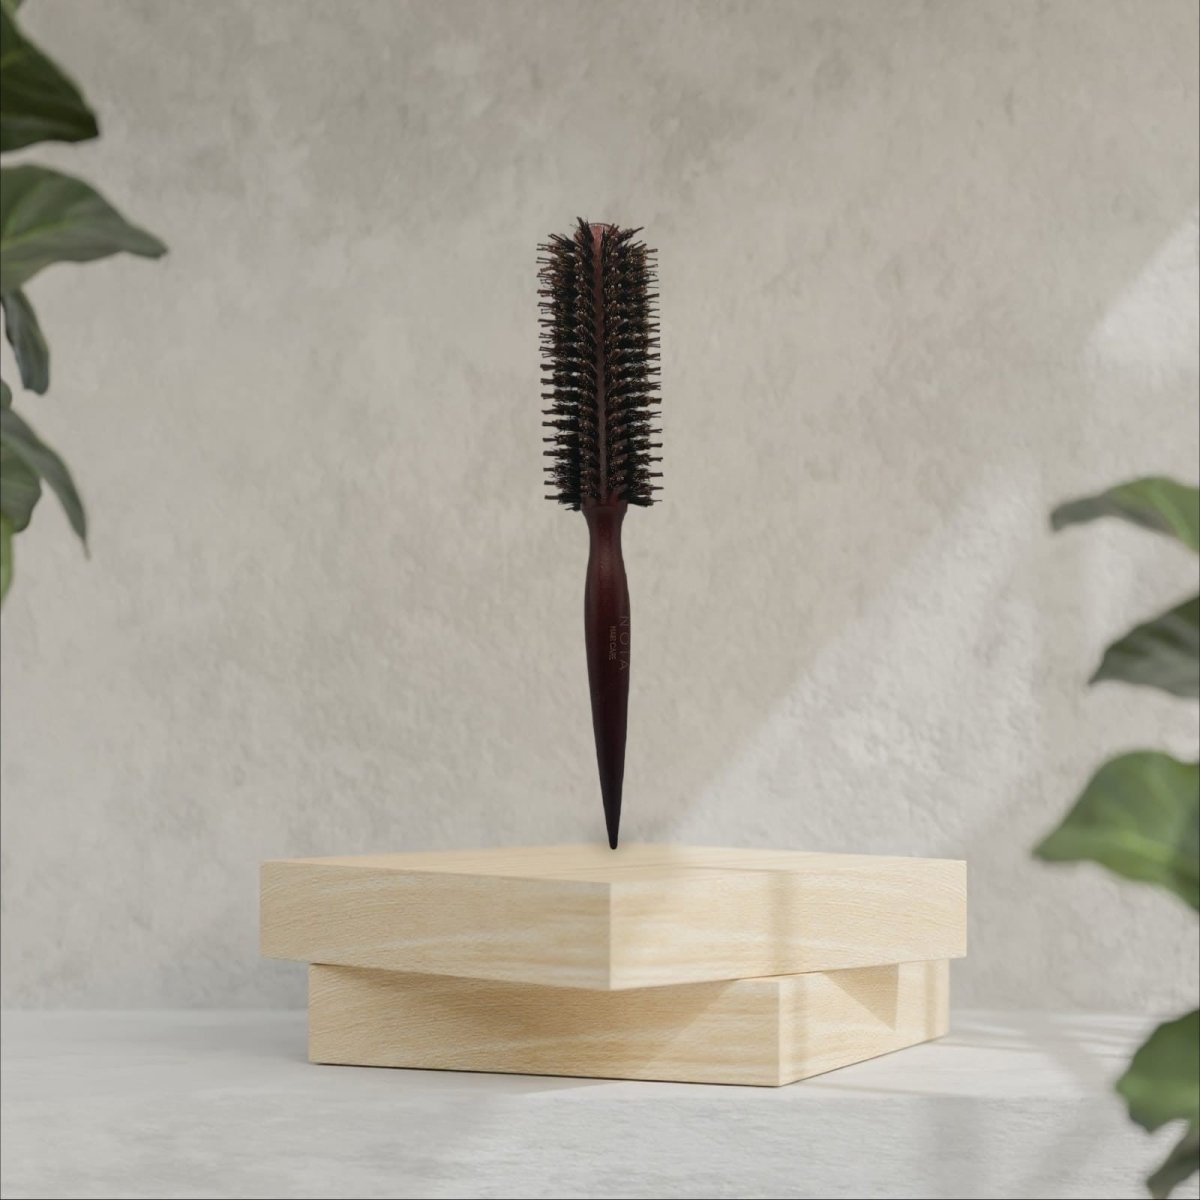 NOIA HAIR - Brosse à Cheveux Ronde Brushing (Brosse ronde 19mm) - BEAUTEPRICE NOIA HAIR - Brosse à Cheveux Ronde Brushing (Brosse ronde 19mm) NOÏA HAIR BEAUTEPRICE